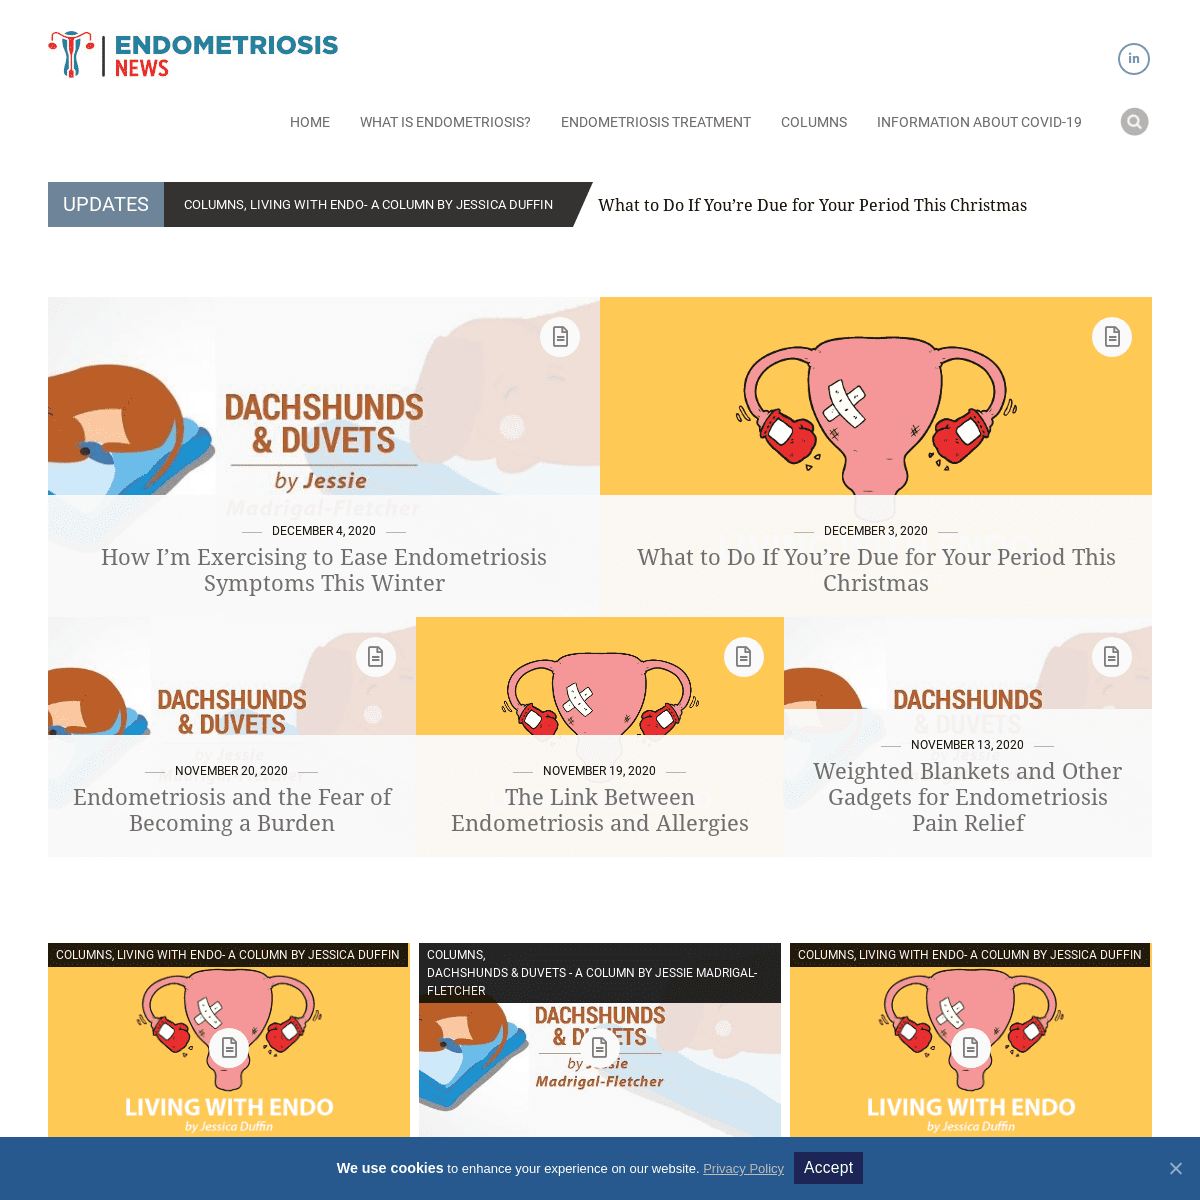 A complete backup of endometriosisnews.com